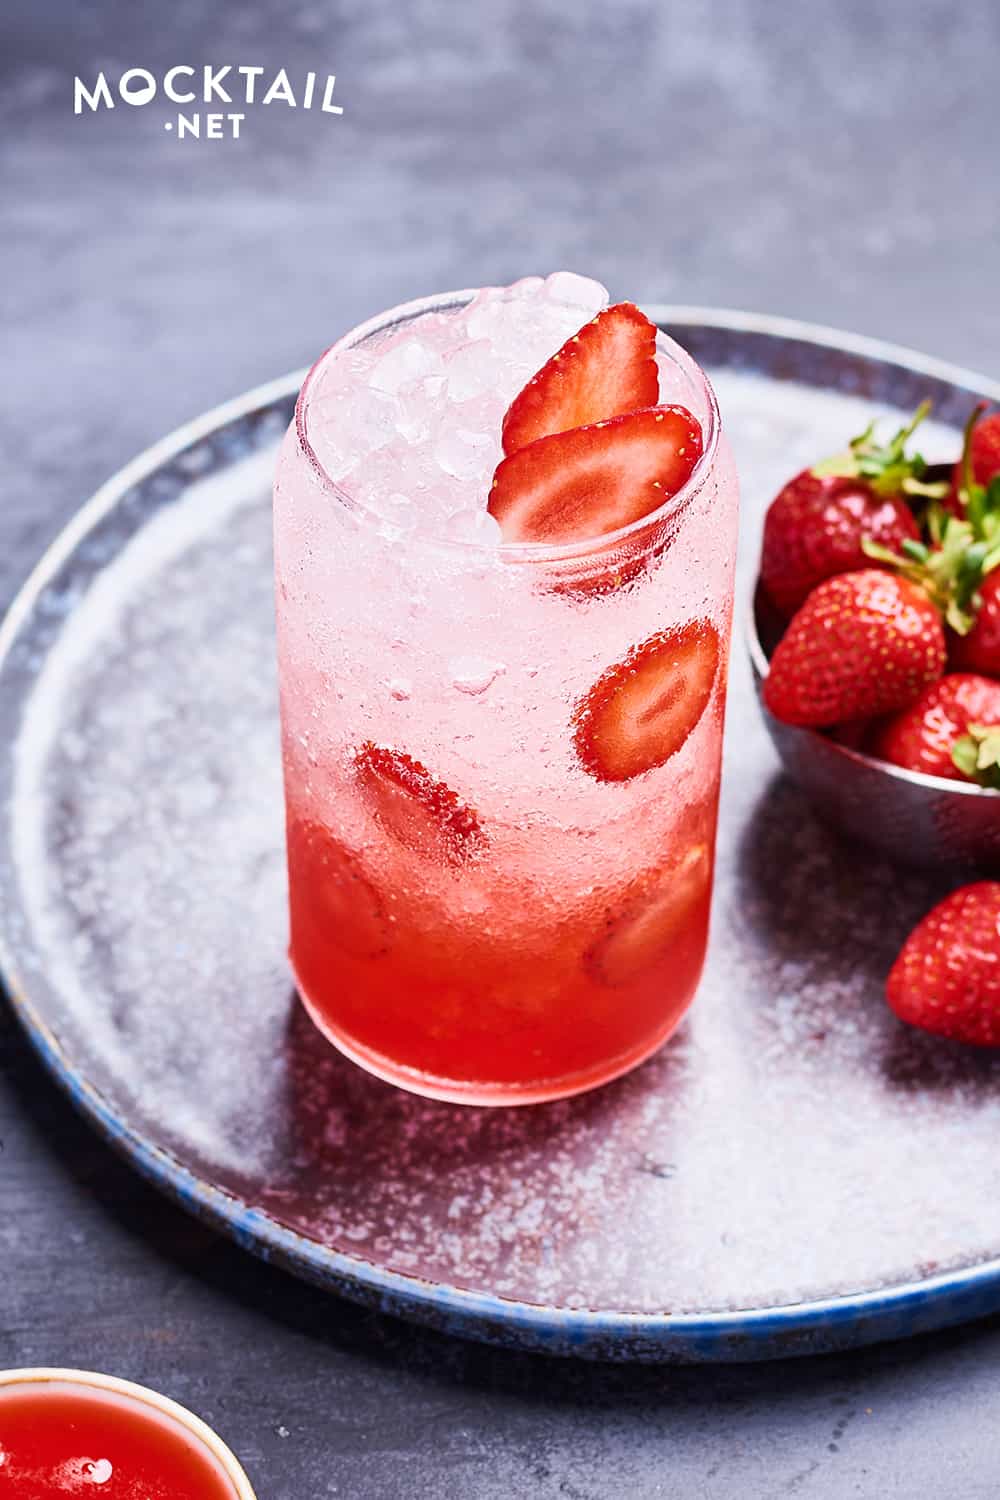 What is strawberry soda?